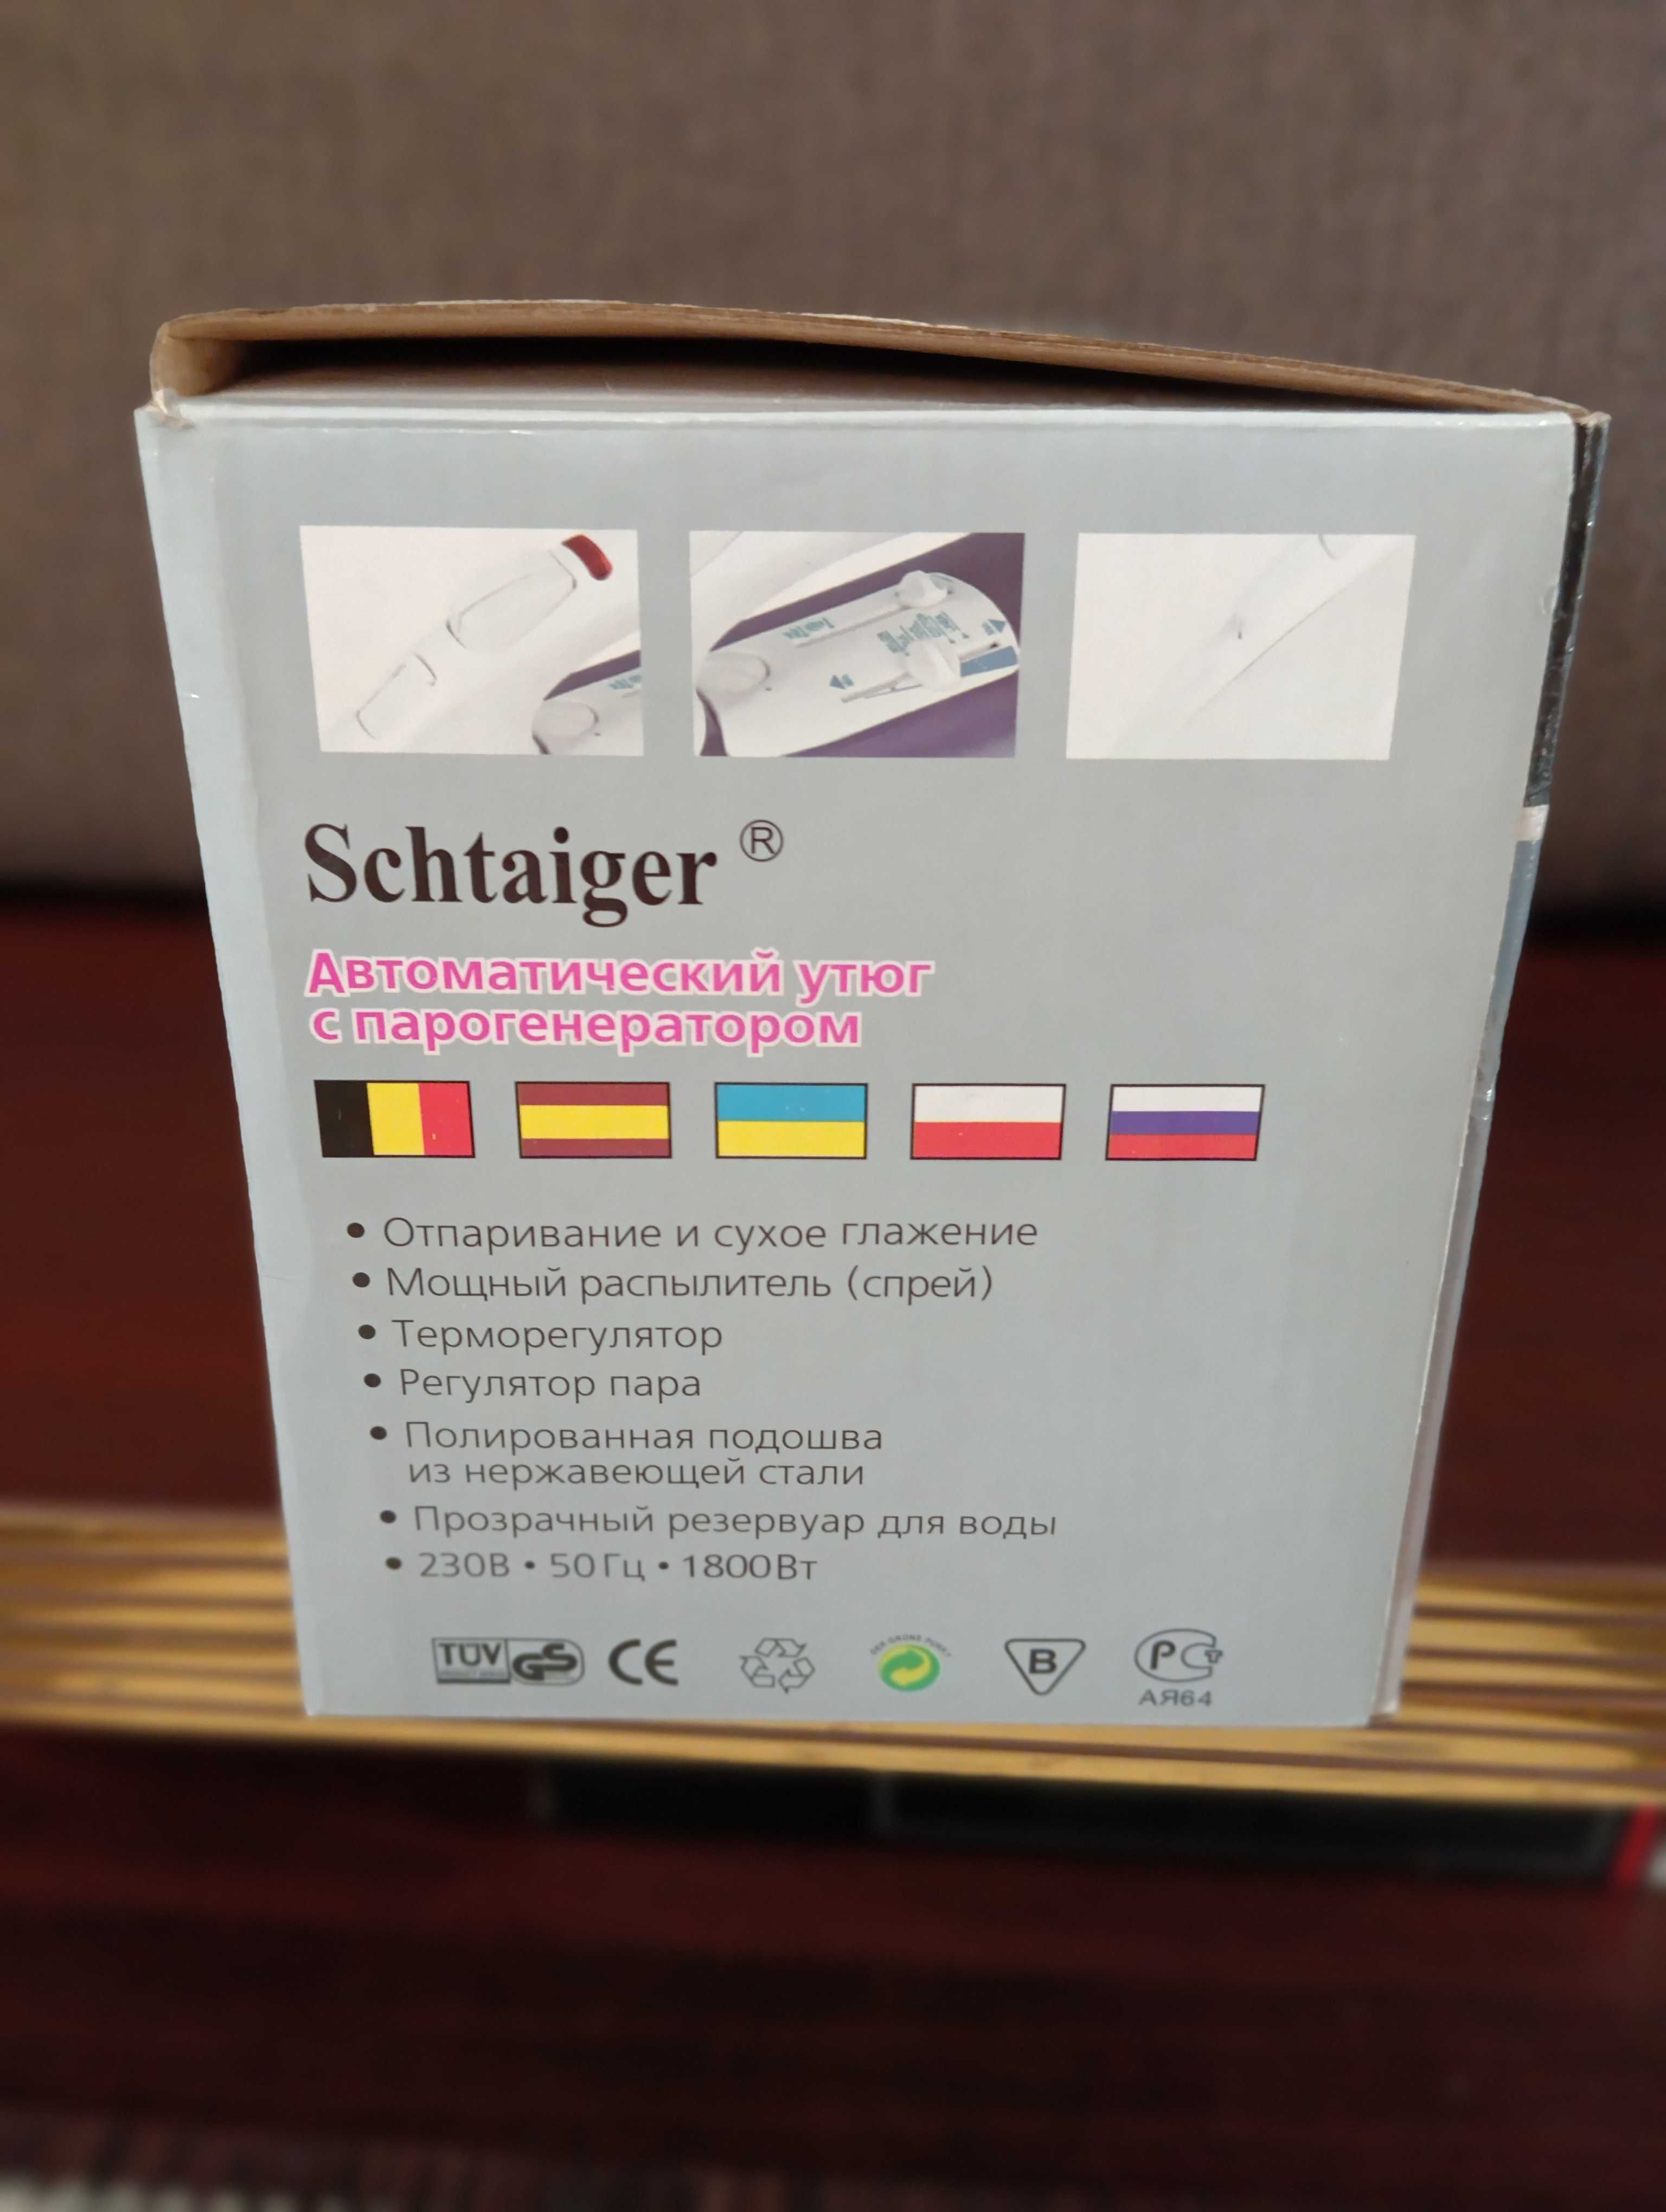 Schtaiger SHG-1268 , 1800 Вт, автоматический утюг